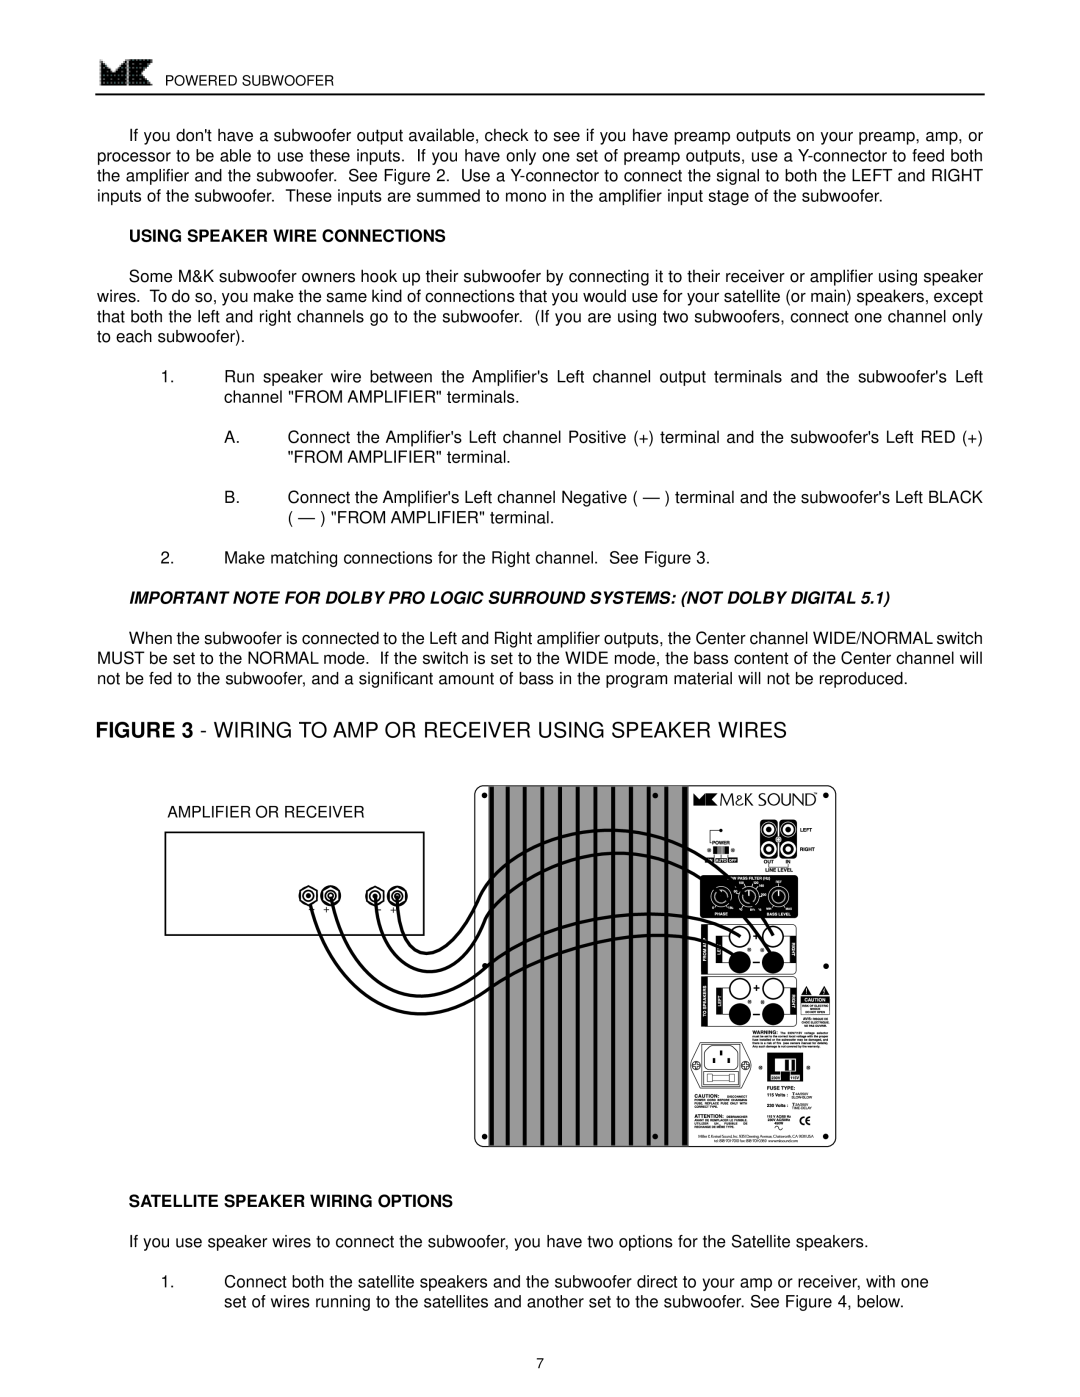 MK Sound VX-860, VX-850 operation manual Using Speaker Wire Connections, Satellite Speaker Wiring Options 